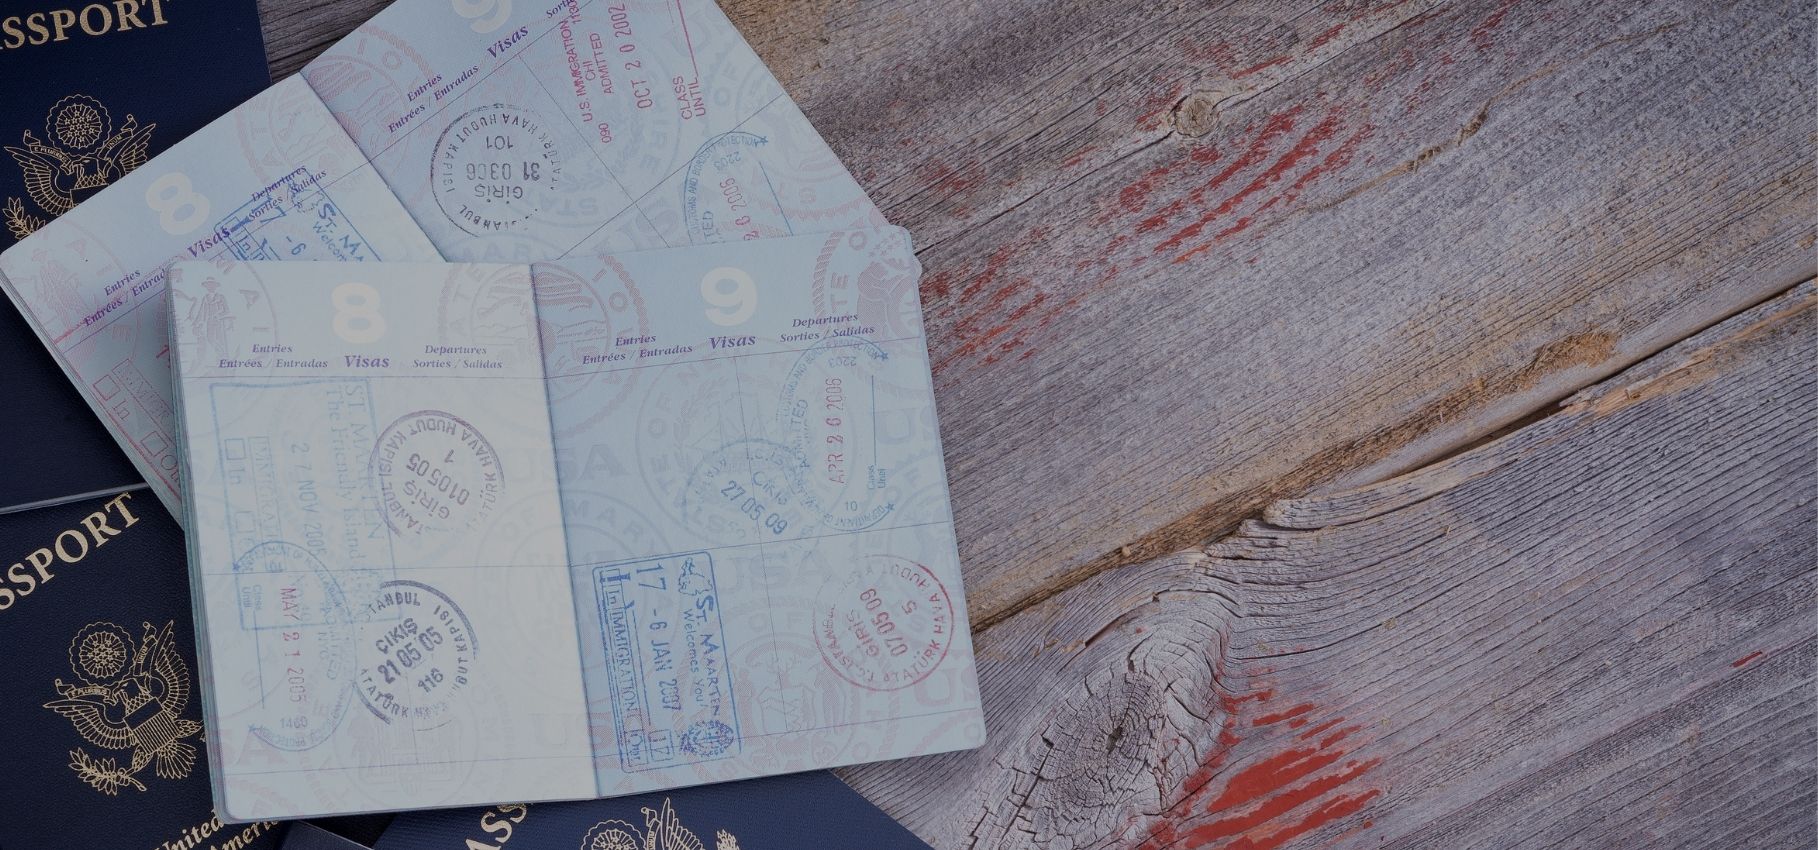 How to get your Passport Renewed in India